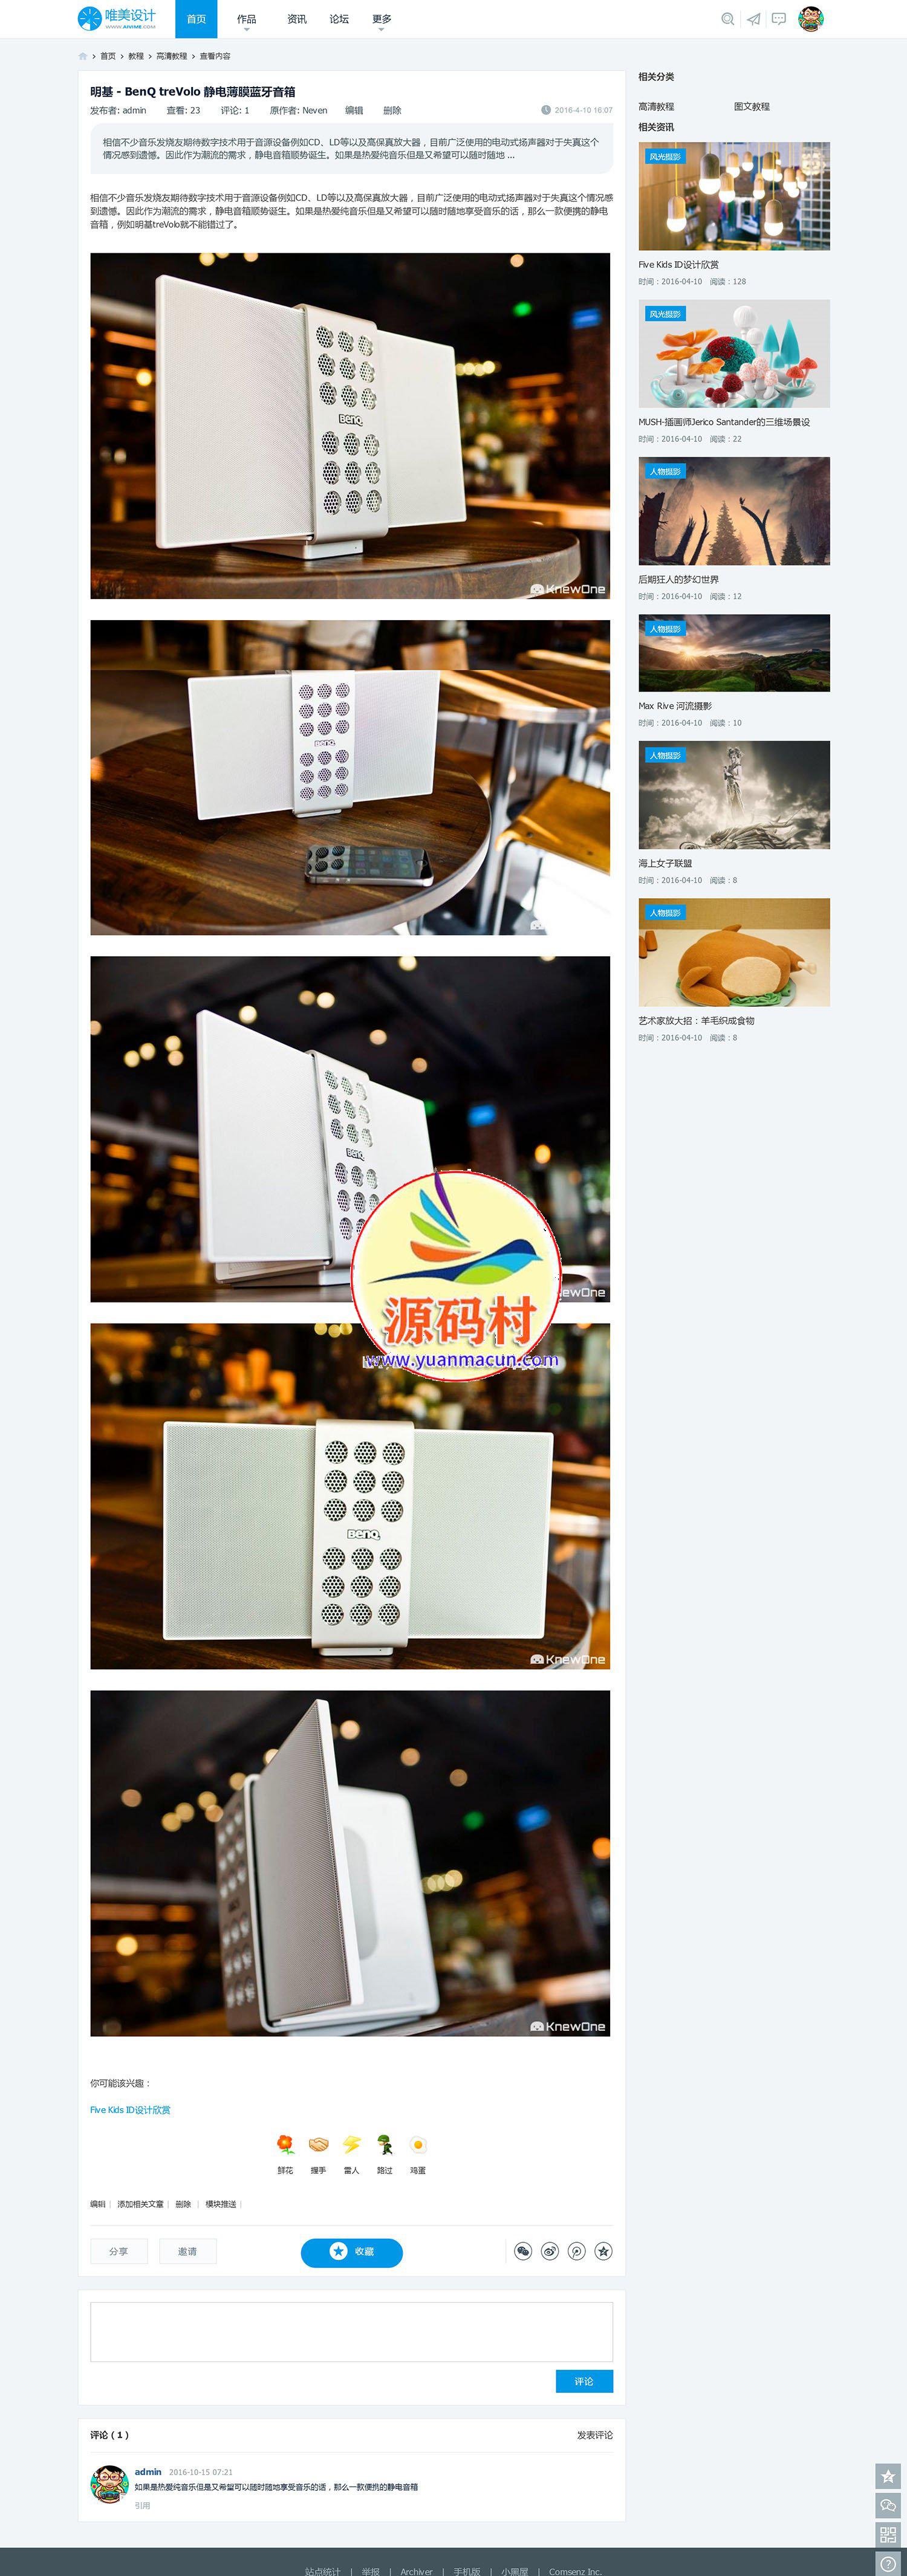 UI设计图片摄影作品商业版配套全套dicuz模板下载空间（双编码GBK+UTF8）,第1张